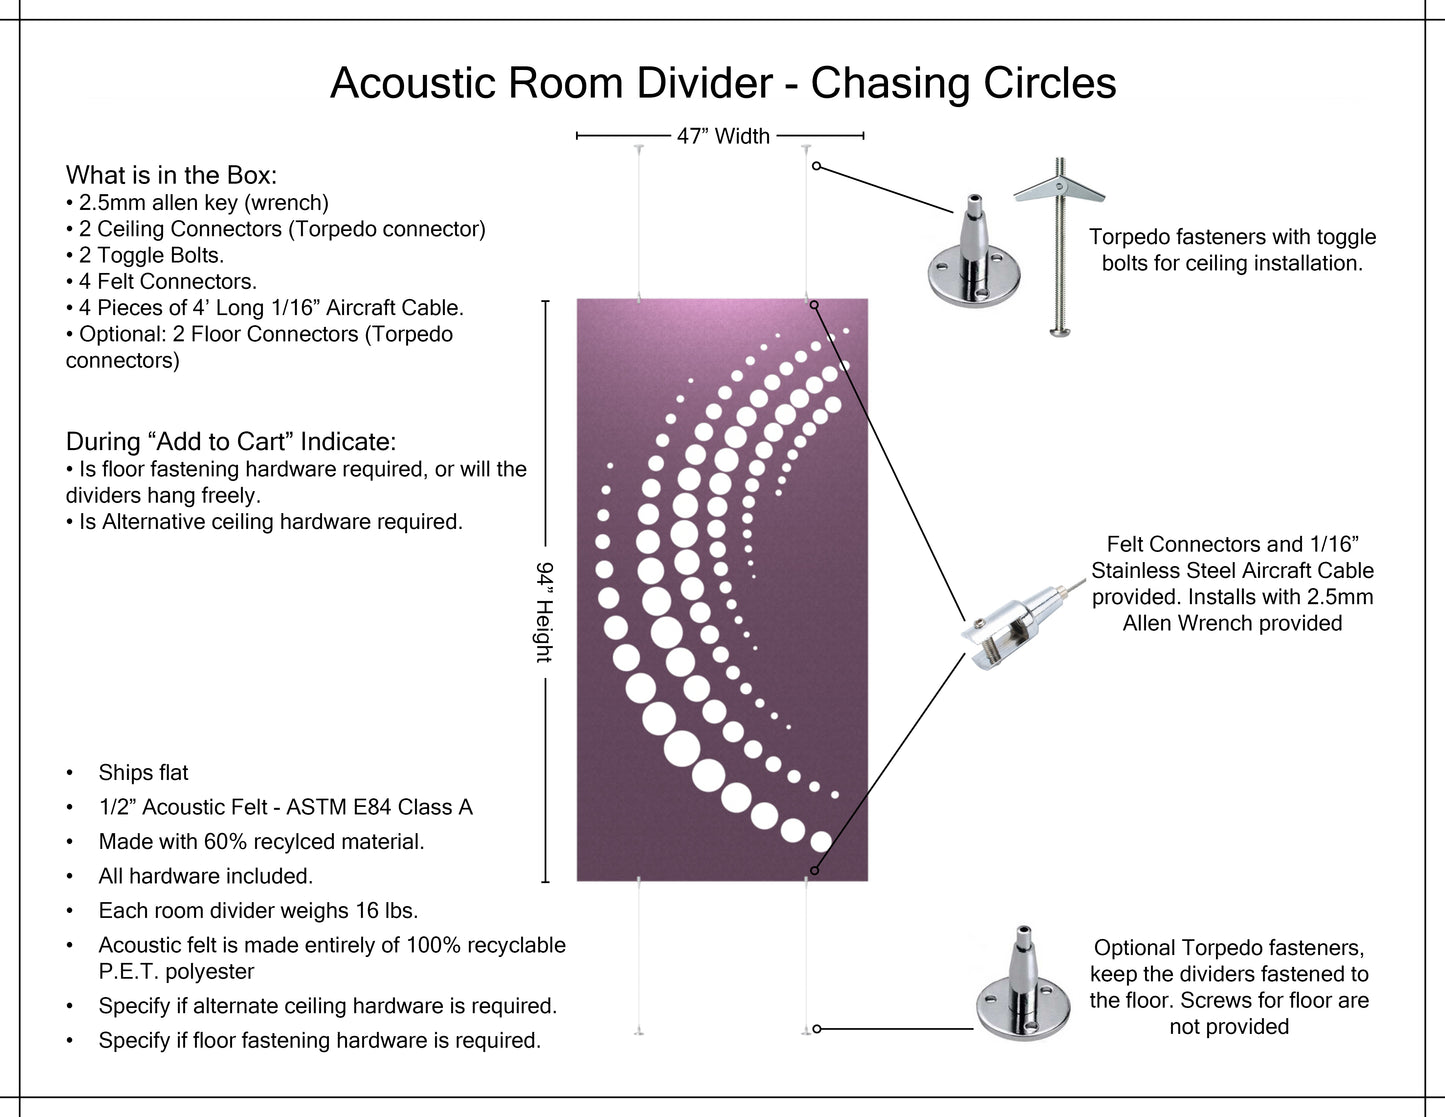 4x8 Acoustic Room Divider - Chasing Circles